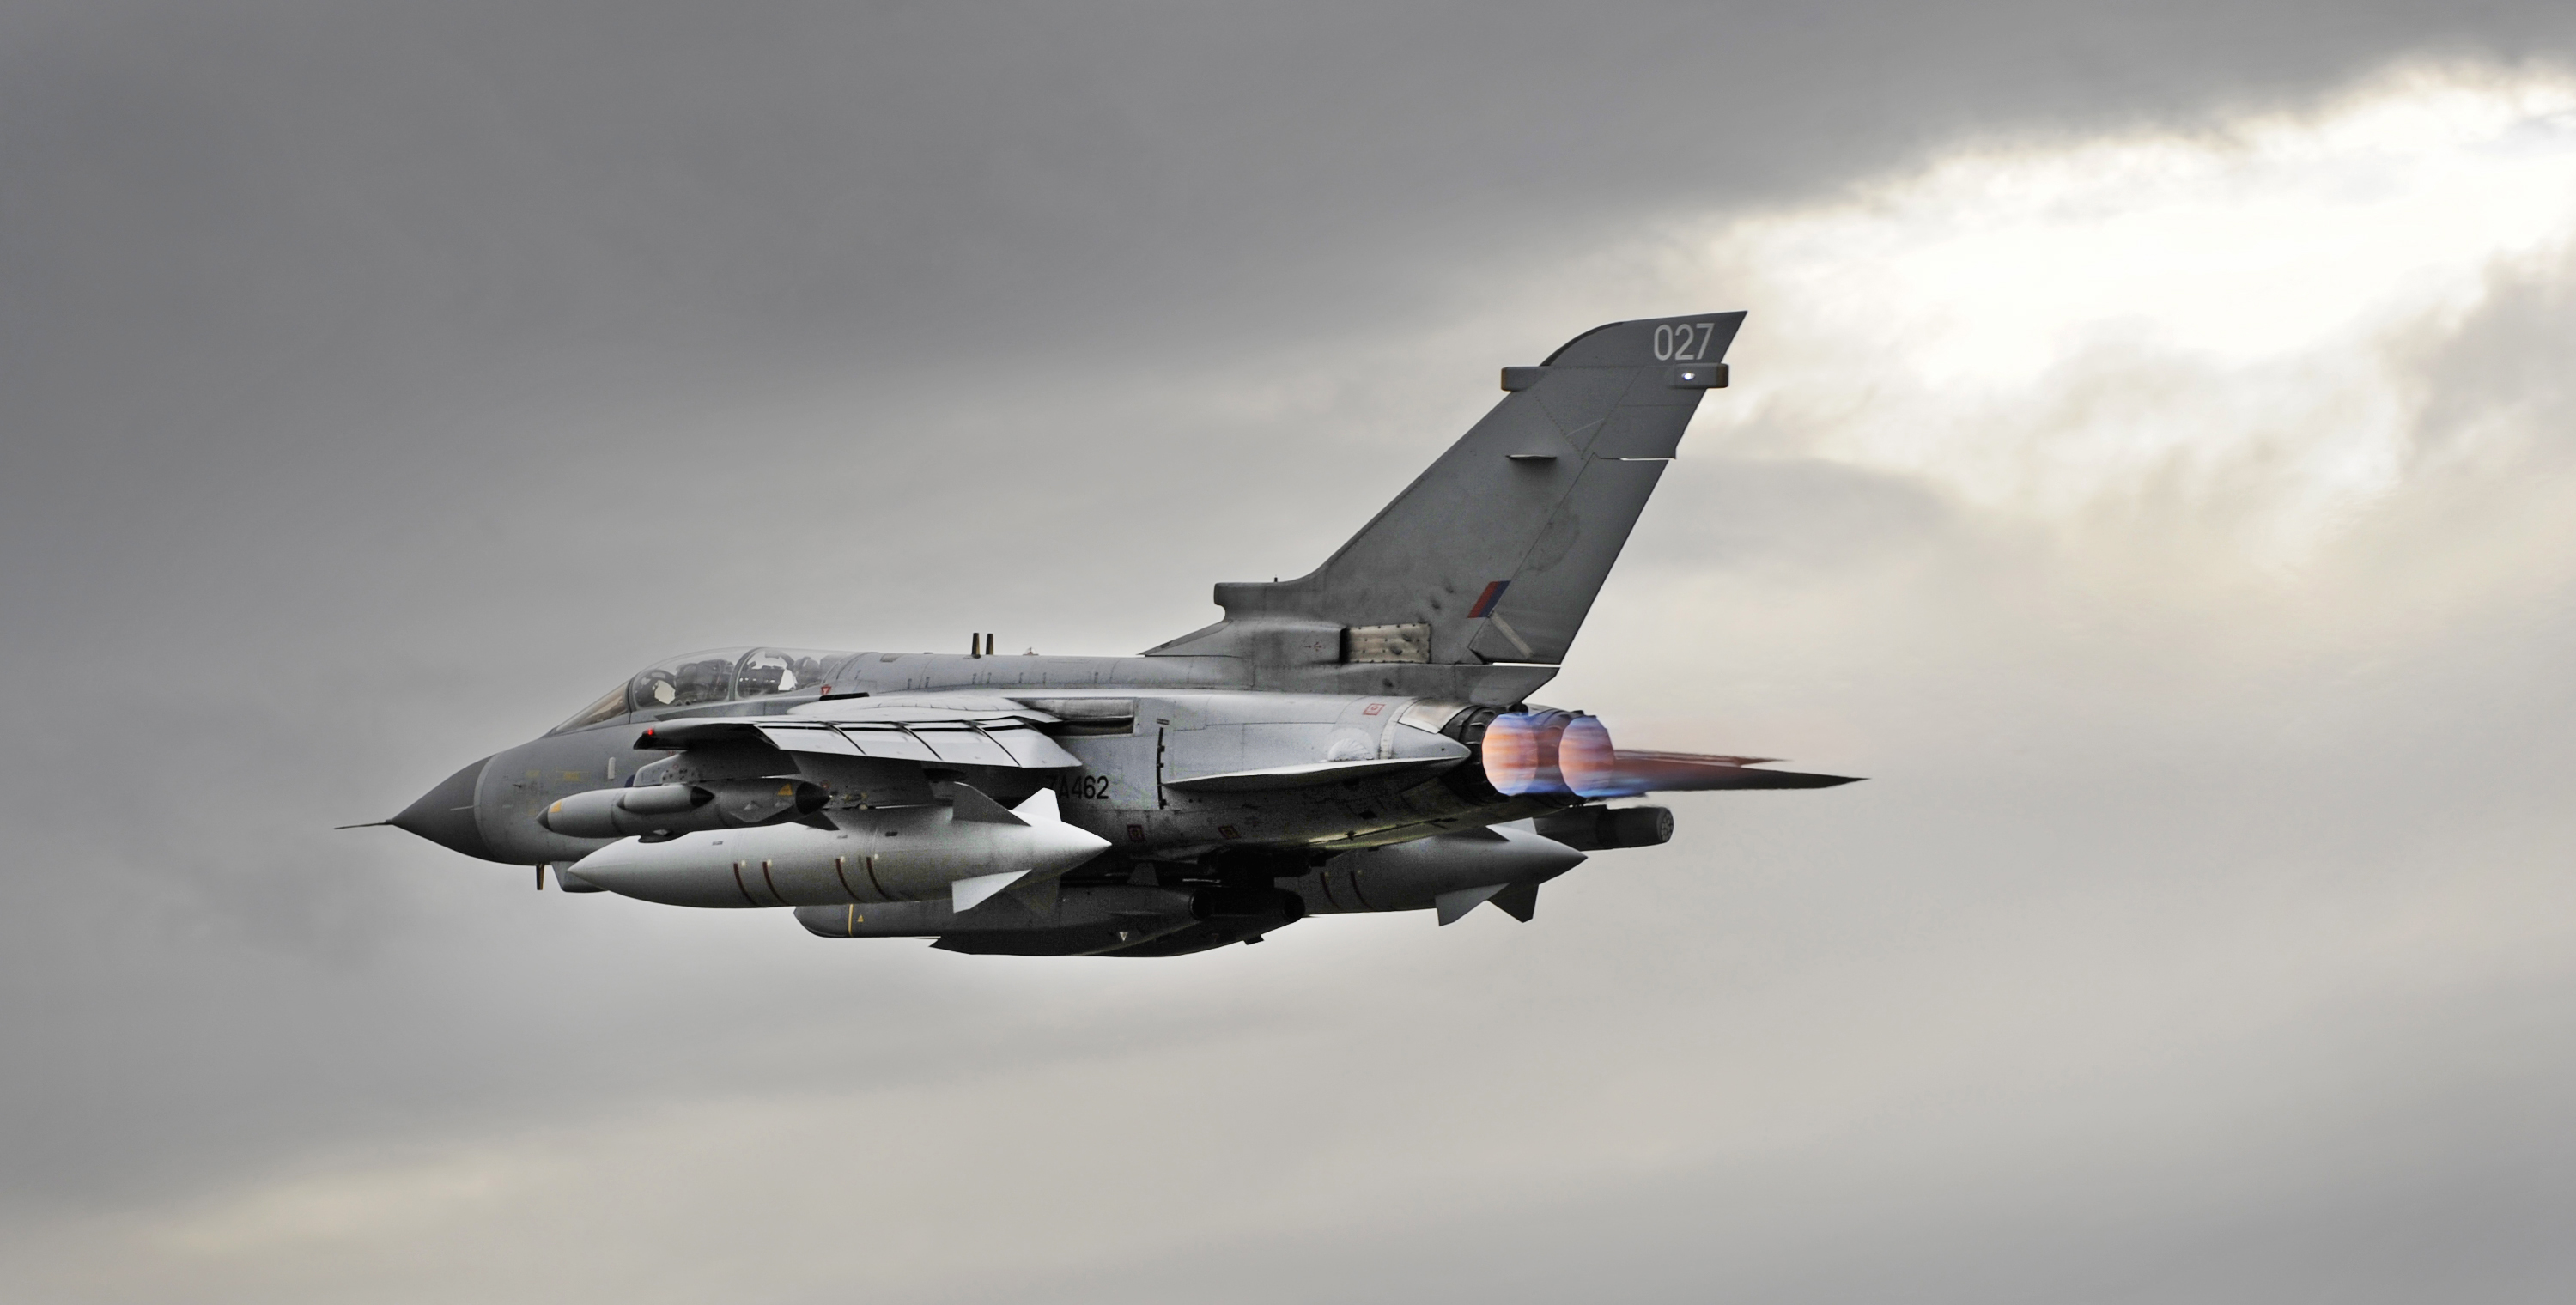  Royal Air Force Tornado GR4 aircraft leaves RAF Marham for operations overseas.